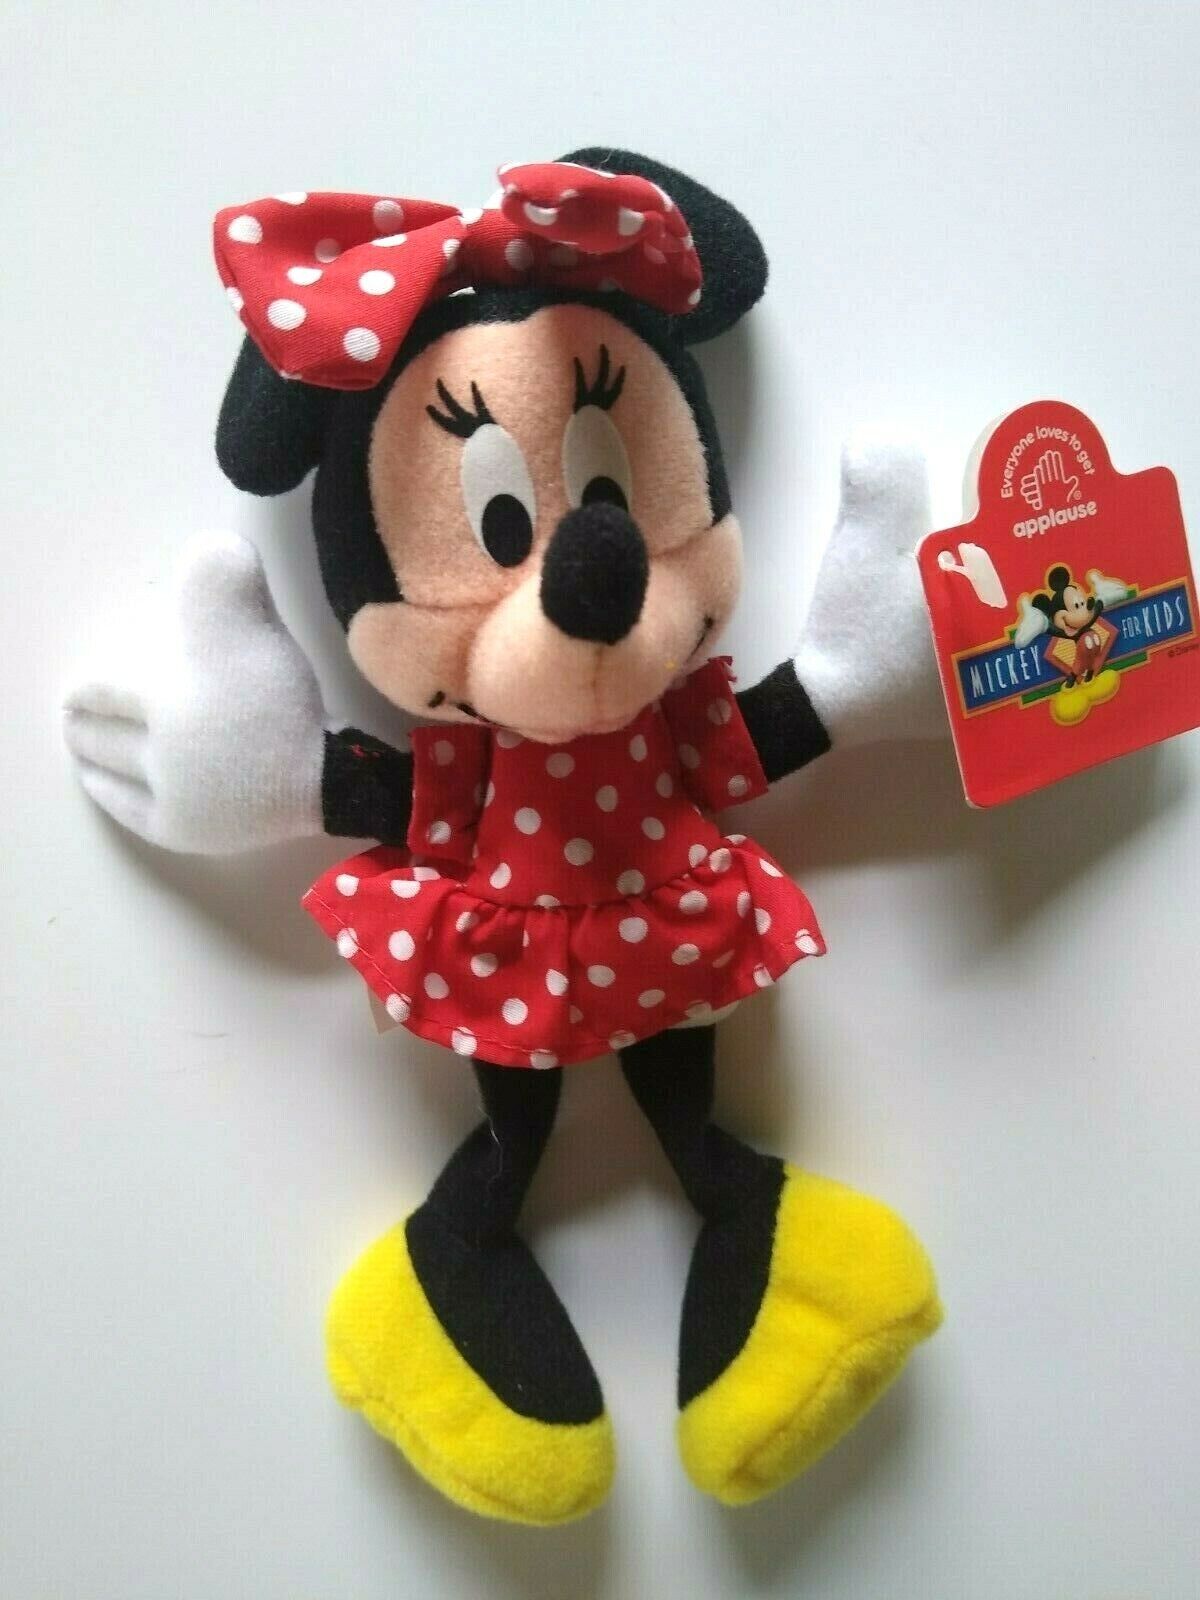 Disney Minnie Mouse Bean Bag Plush Figure Tag & Hanger 1998 Vintage Applause NOS - $24.23